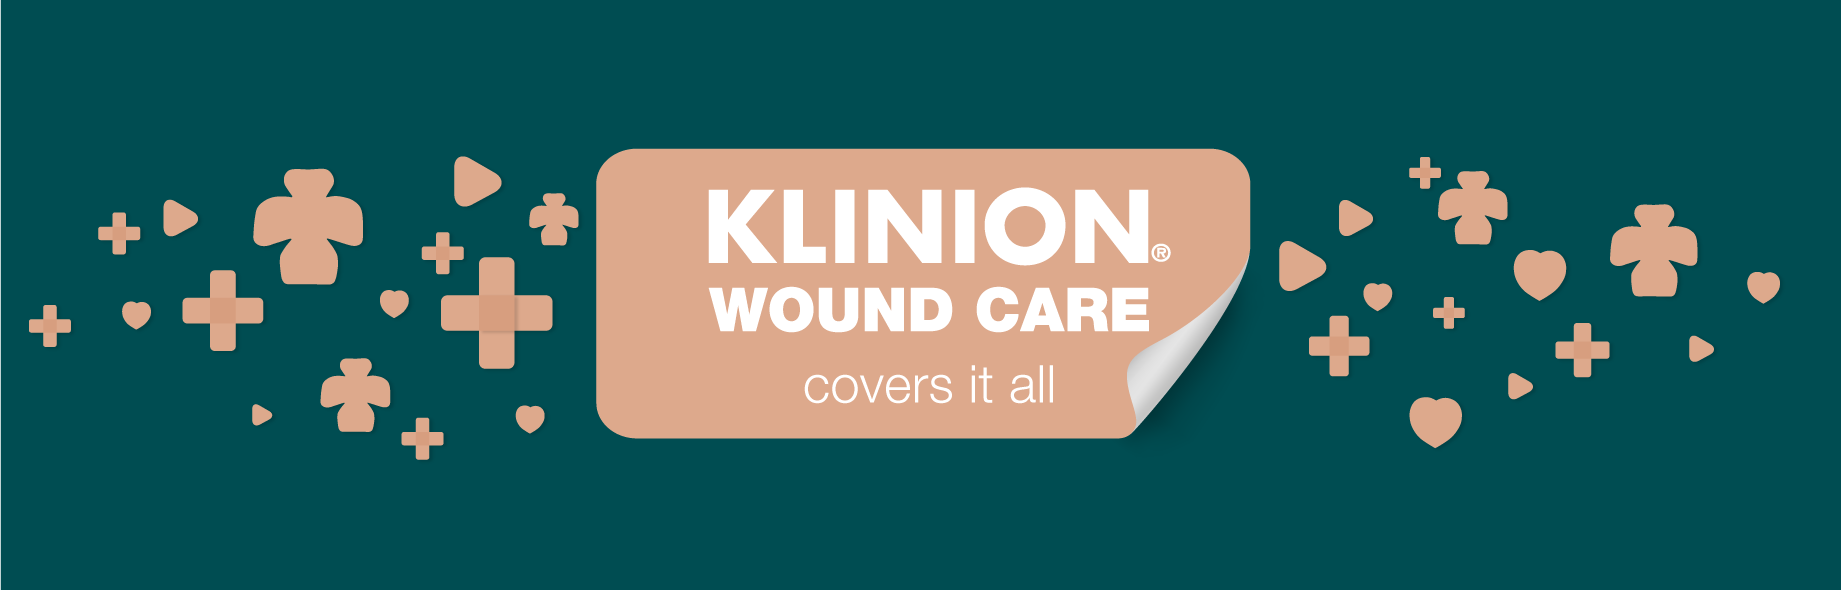 Banner klinion woundcare